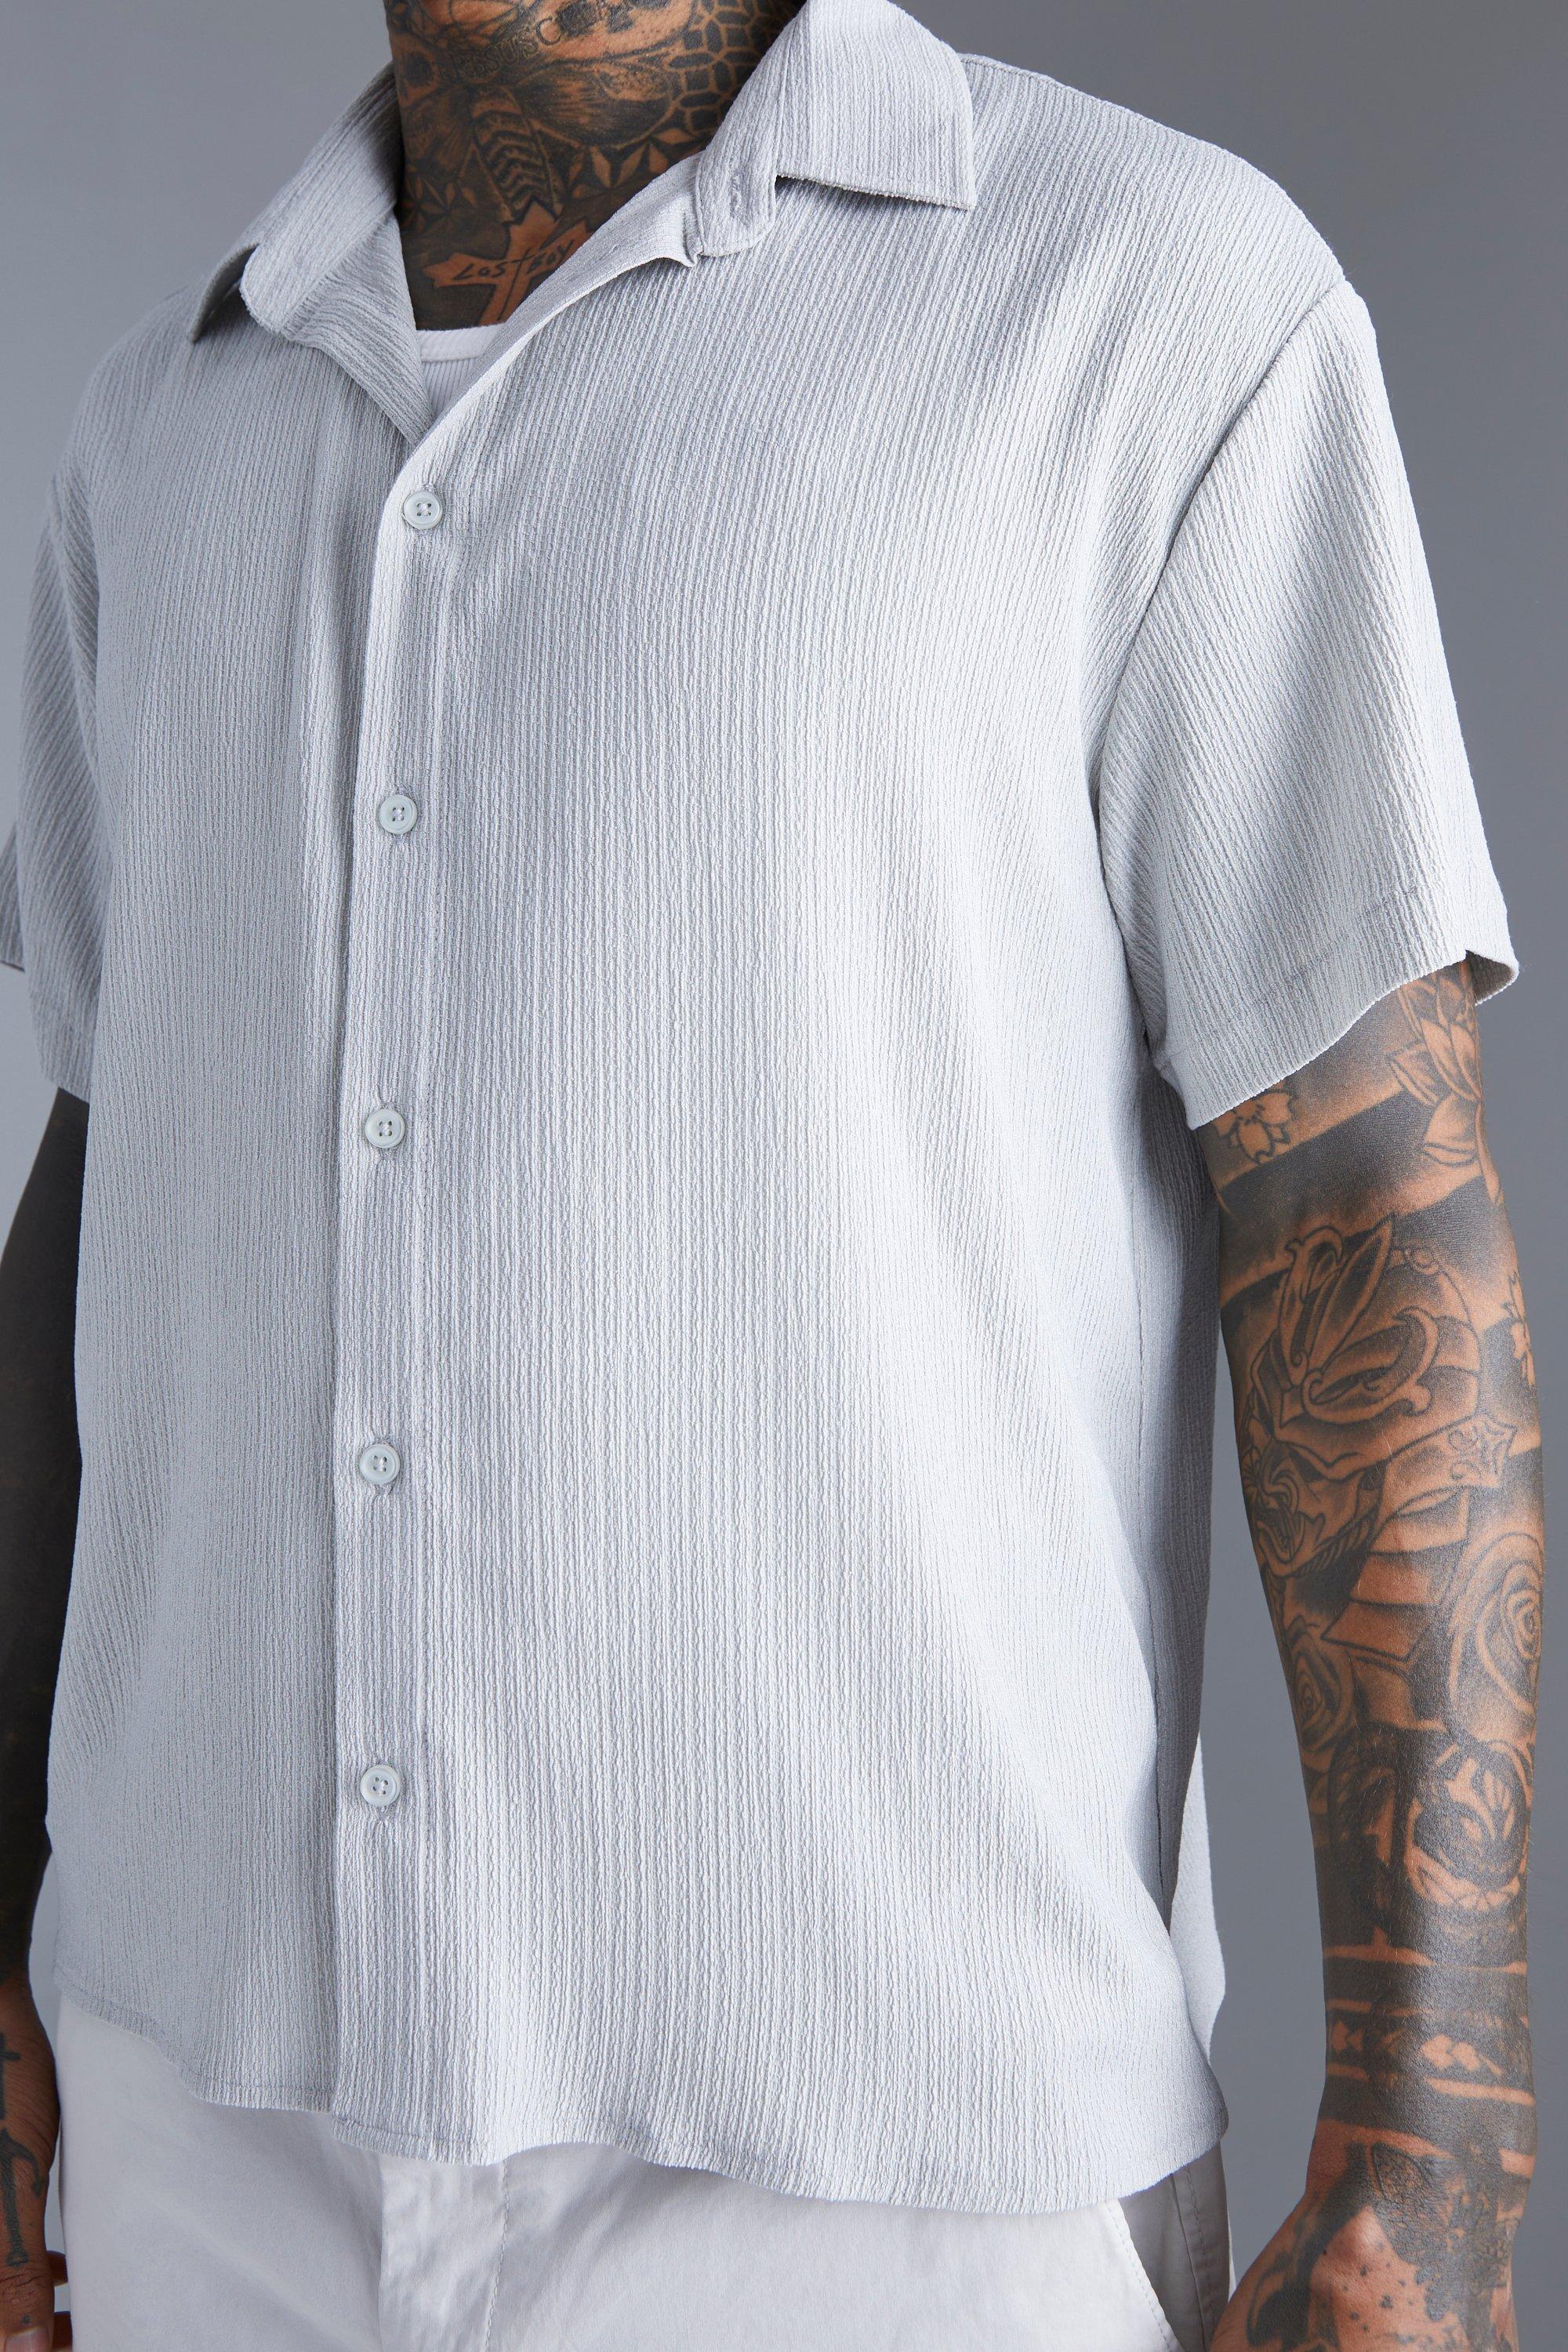 Short-Sleeve Crinkled Button-Down Shirt for Women